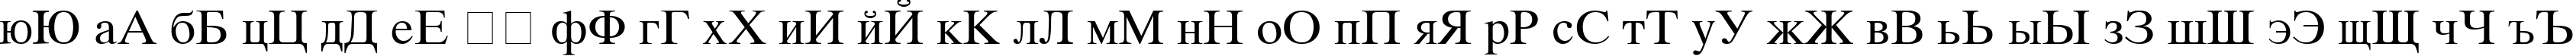 Пример написания русского алфавита шрифтом KOI8 Times